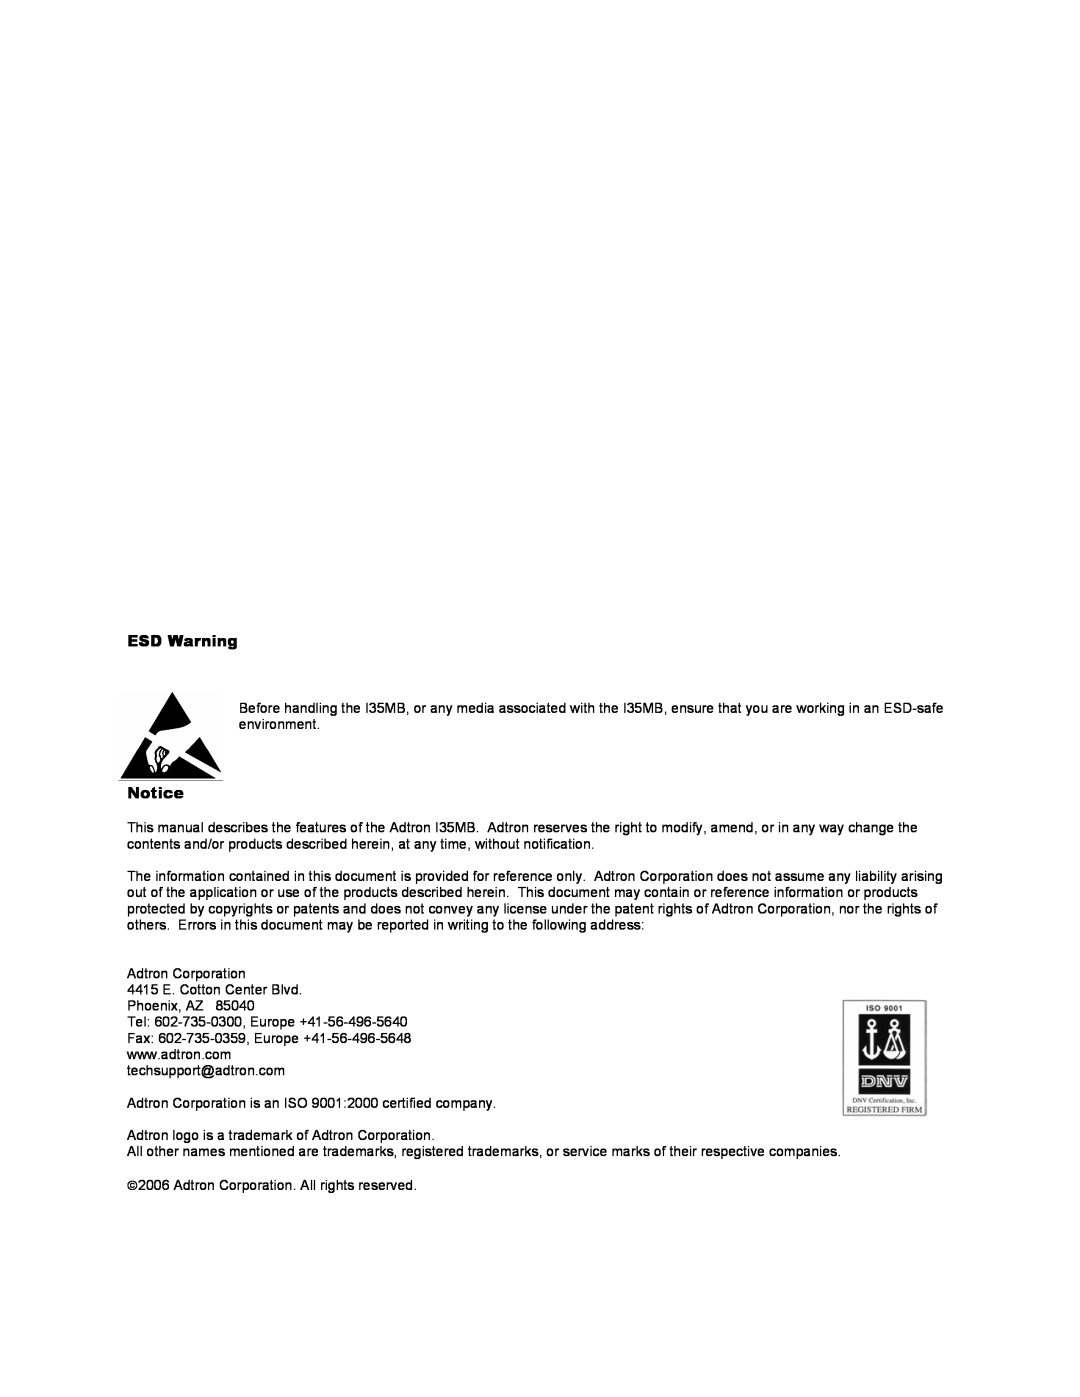 ADTRAN 610200094 manual ESD Warning 